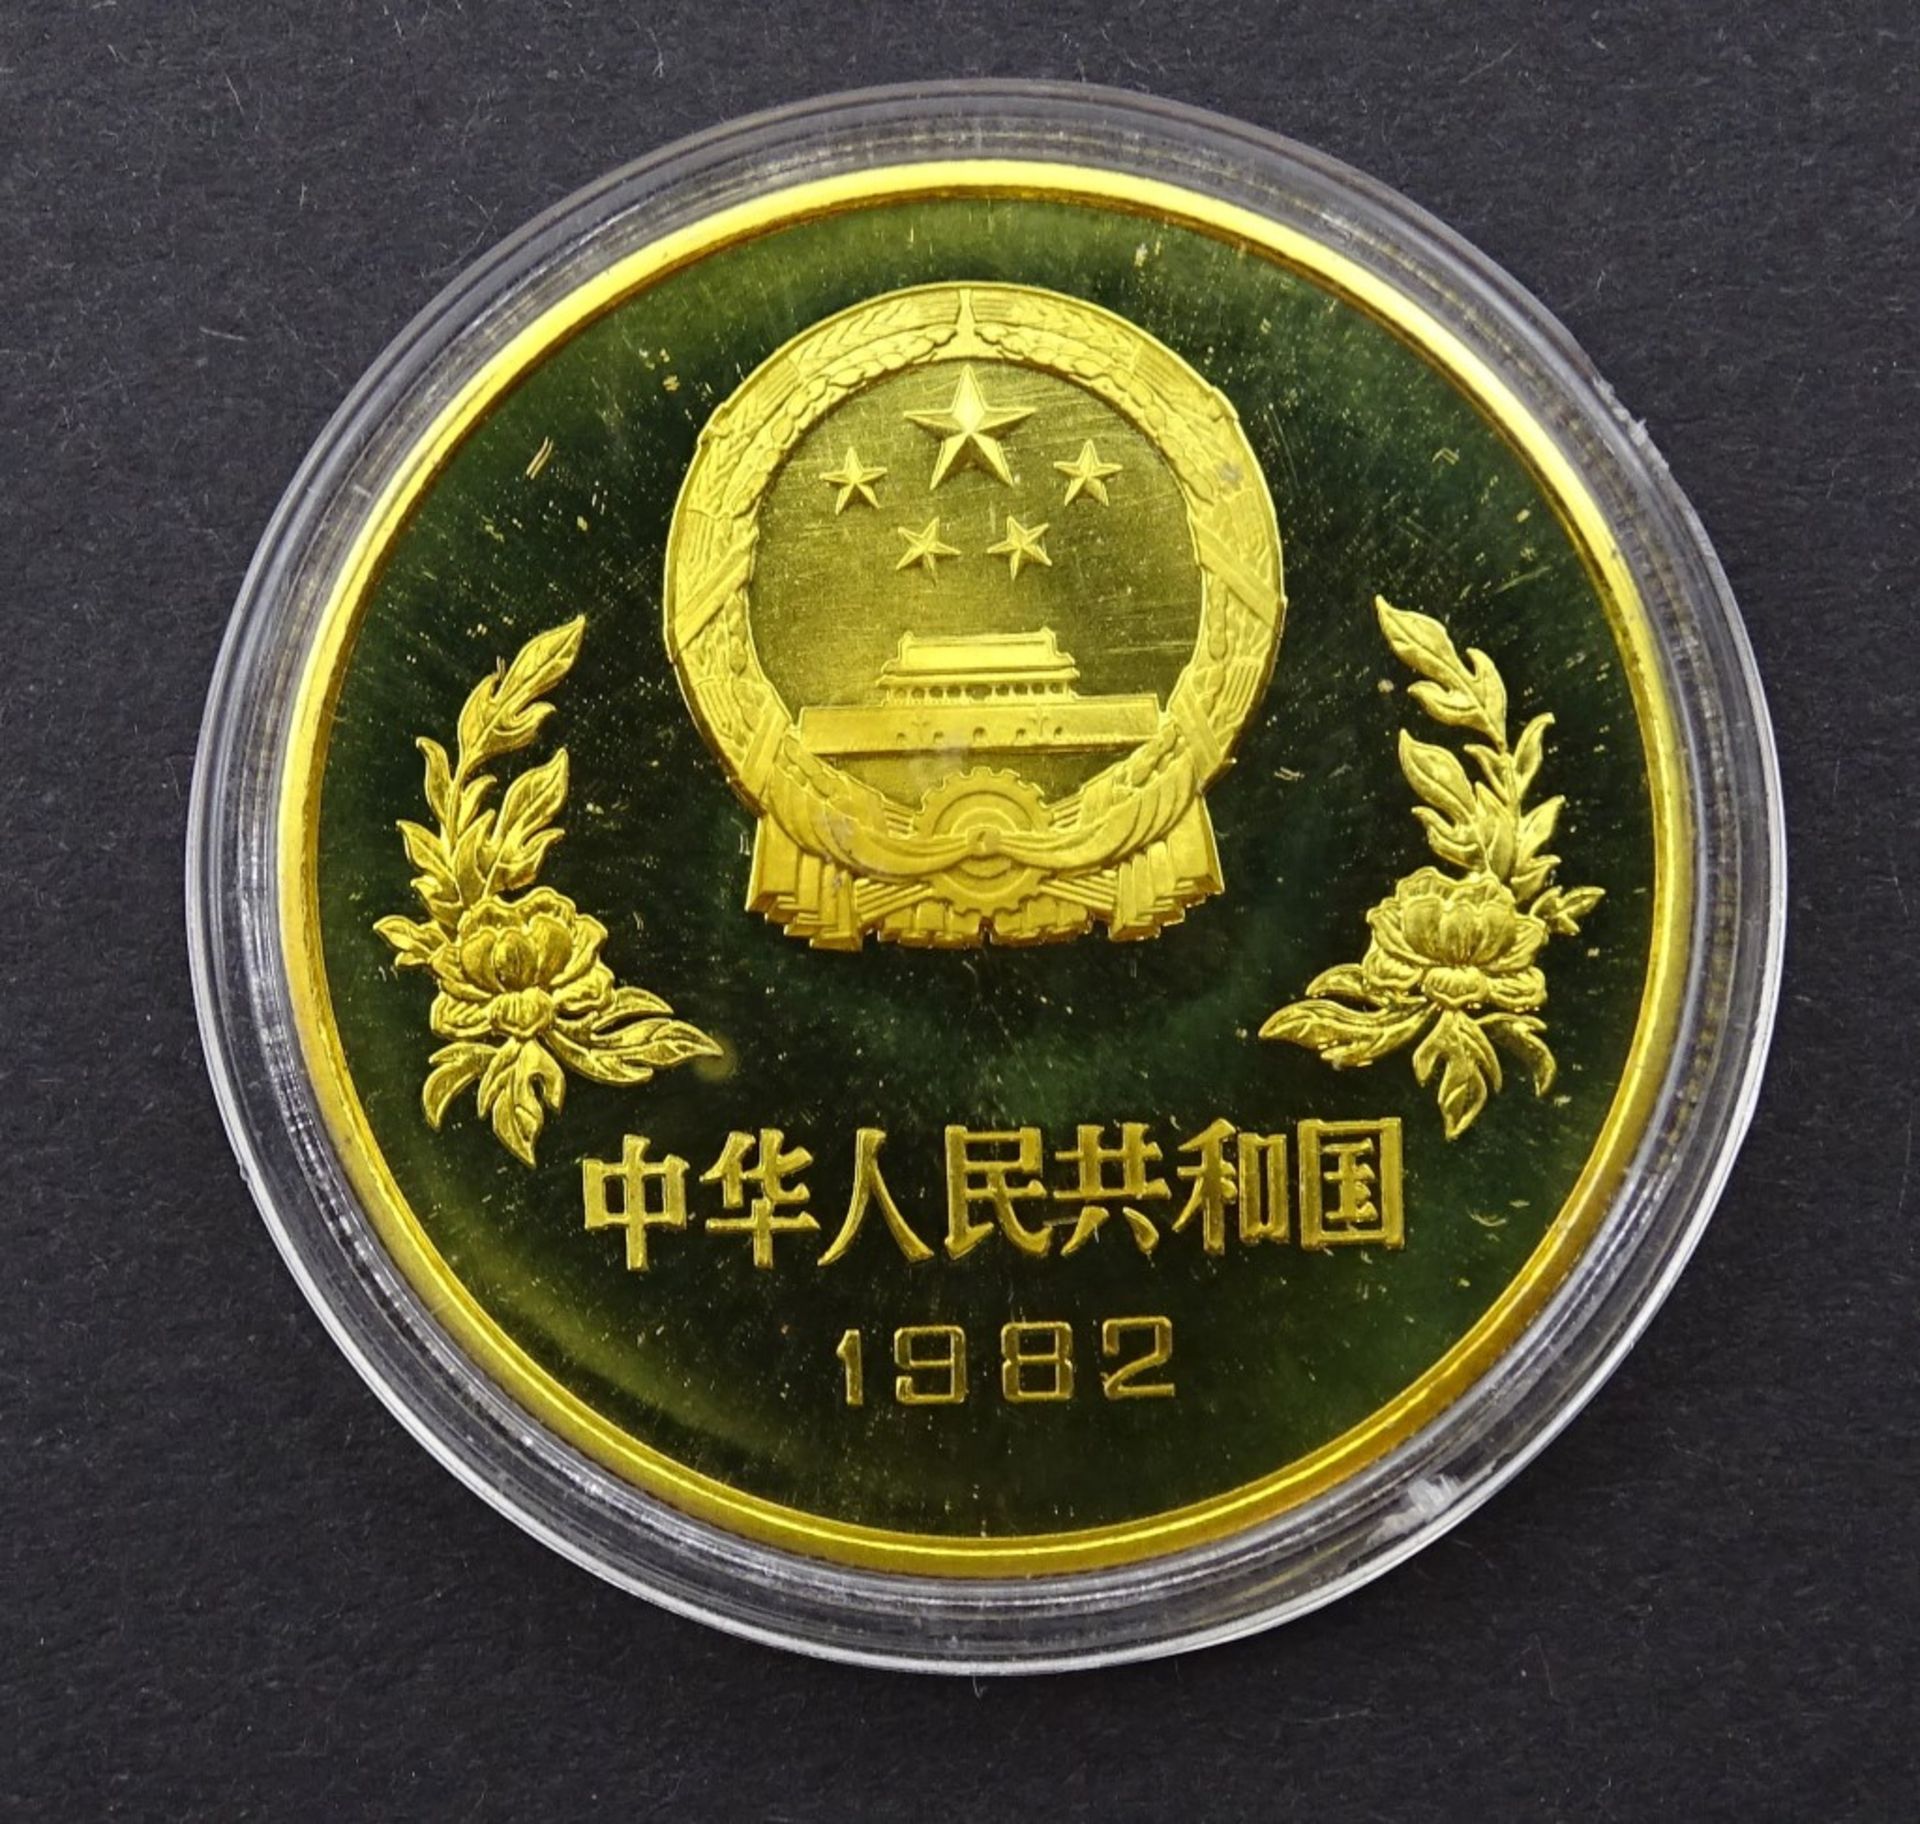 1 Yuan 1982 Volksrepublik China China Gedenkmünze Fußball-WM 198 - Image 2 of 2